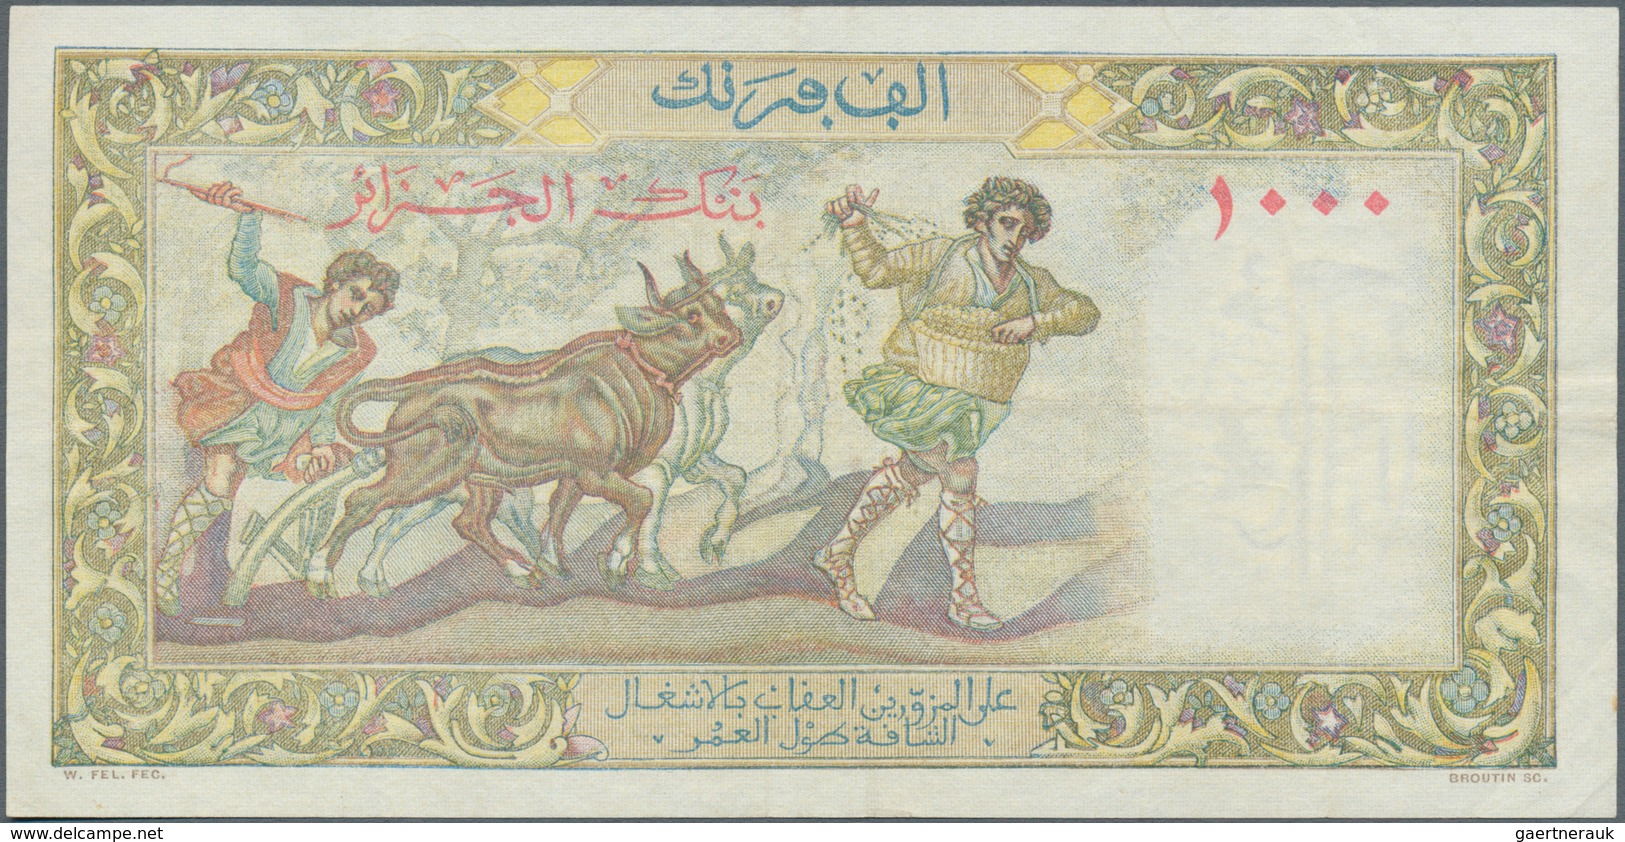 01009 Algeria / Algerien: 1000 Francs 1947 P. 104, Light Folds In Paper, No Holes, Still Nice Colors And S - Algerije